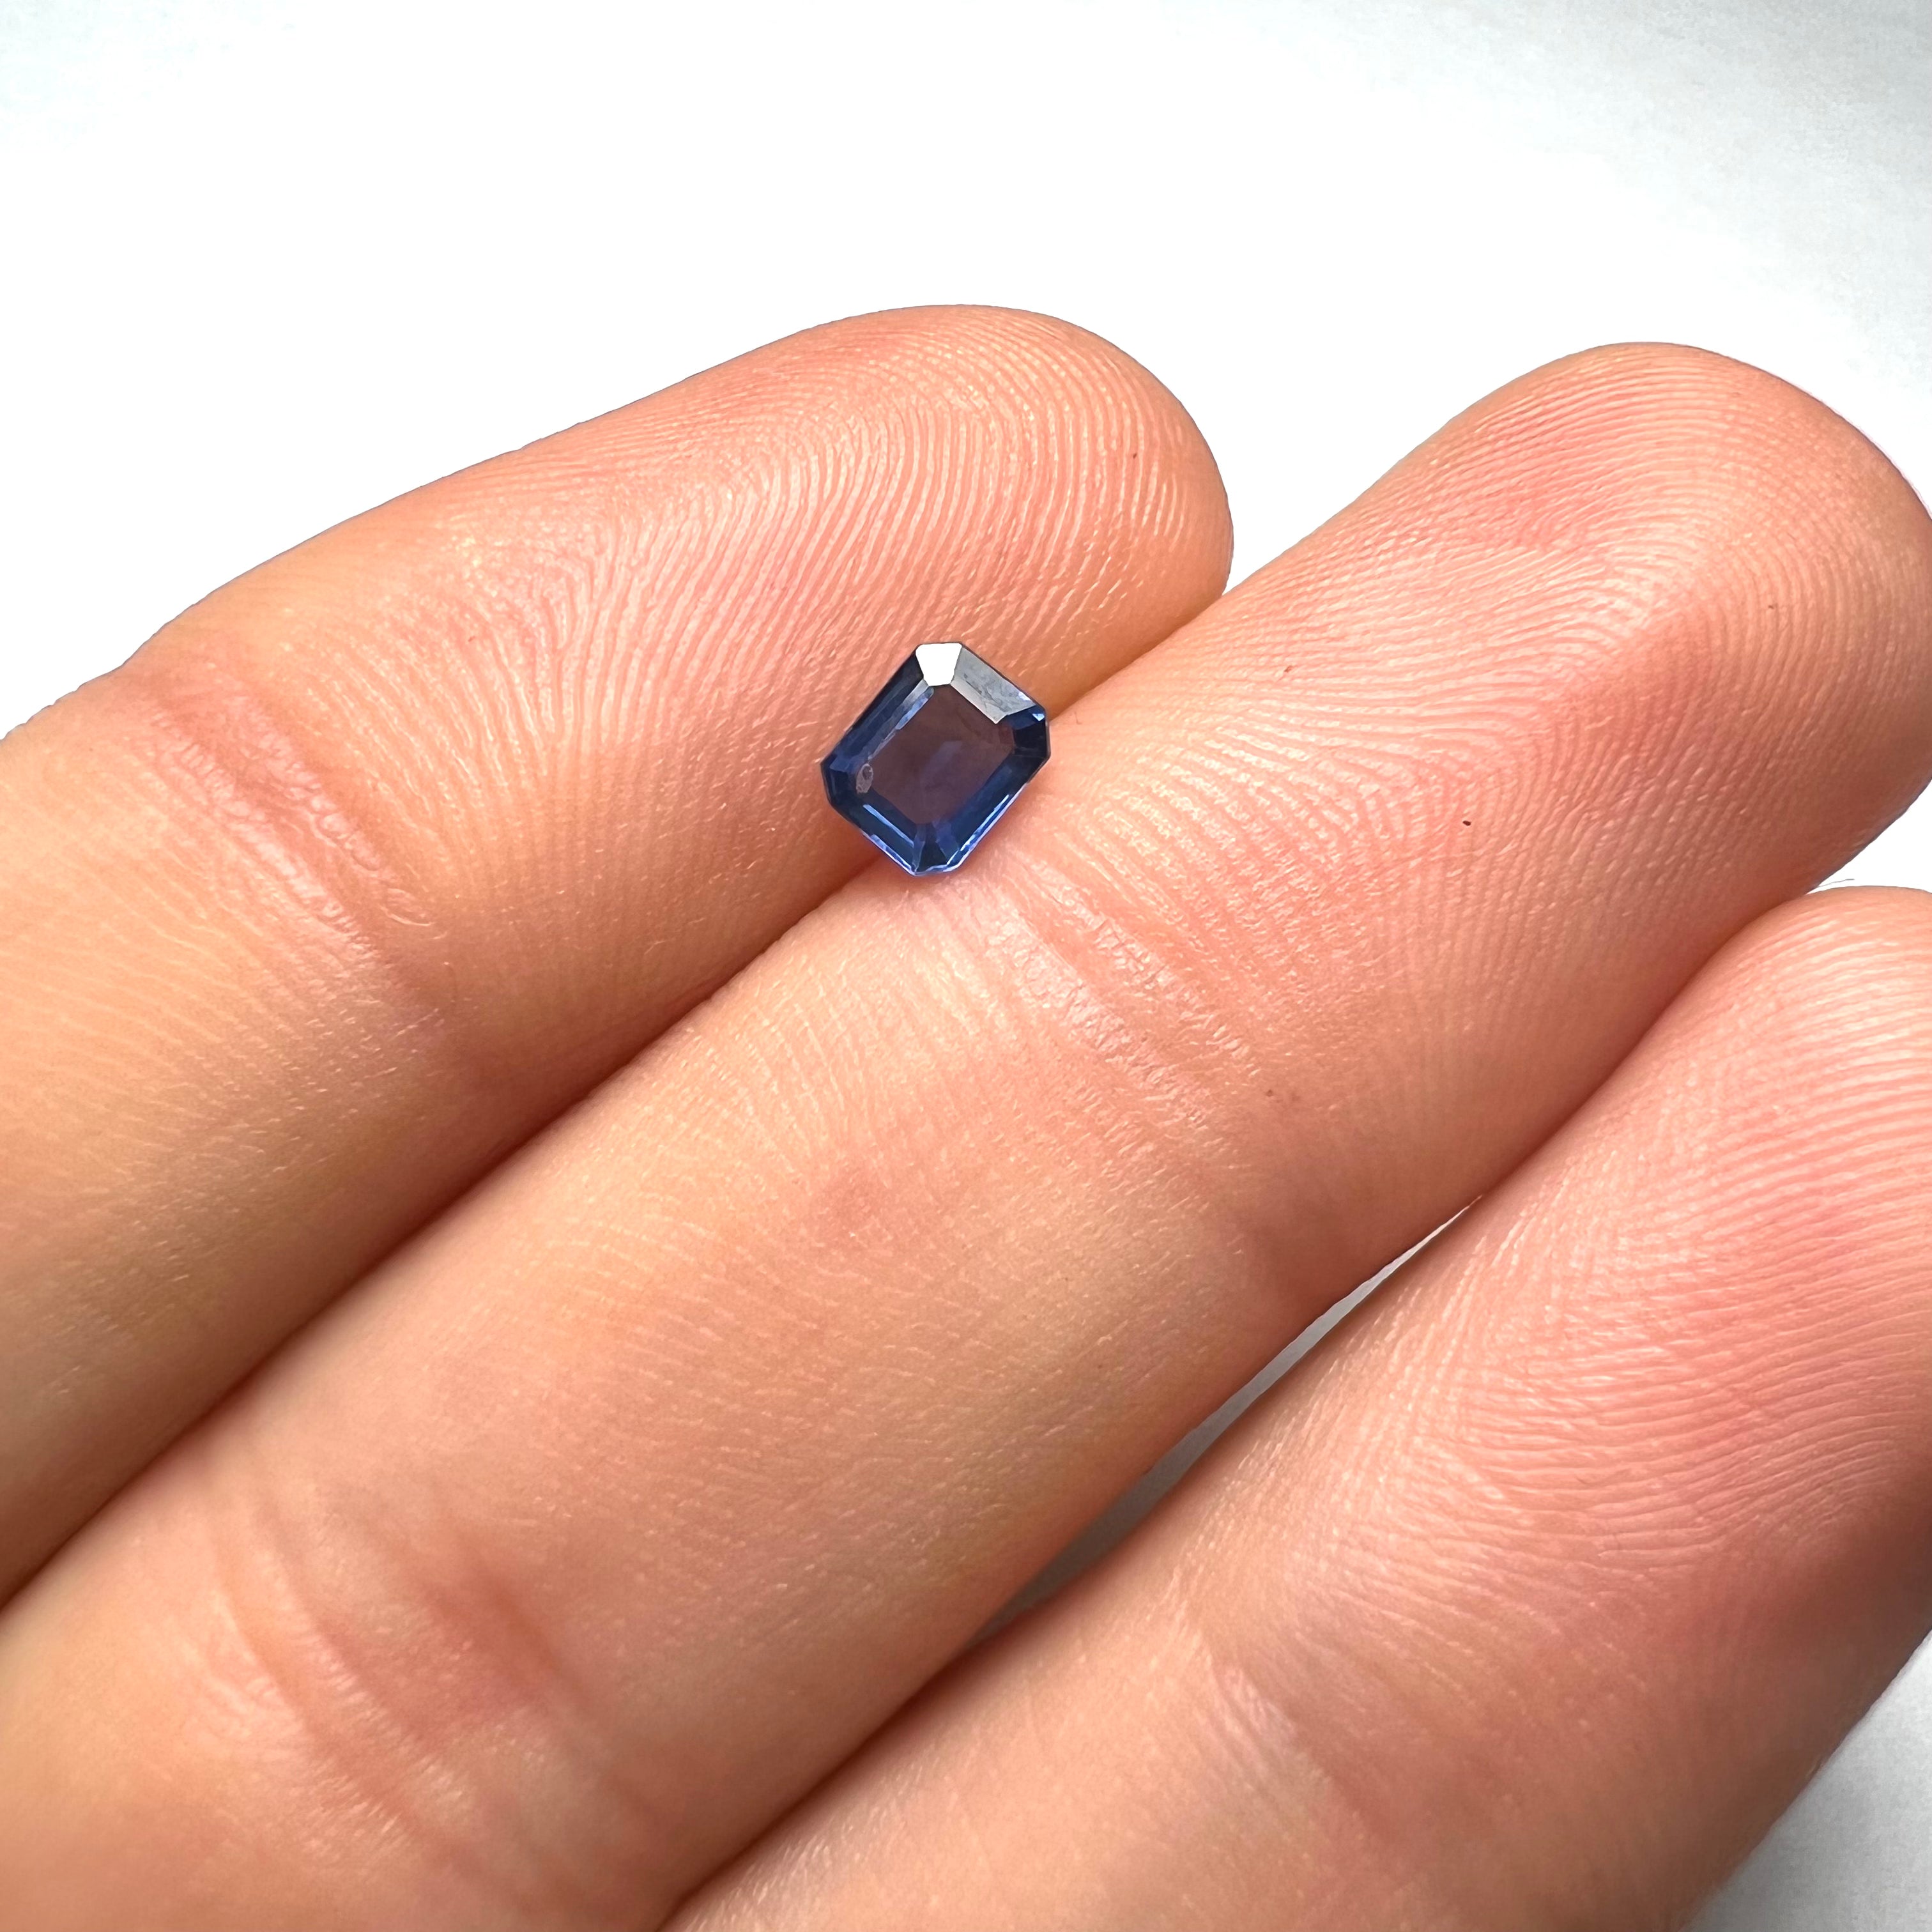 .49CT Loose Blue Emerald Cut Sapphire 5x4x2mm Earth mined Gemstone